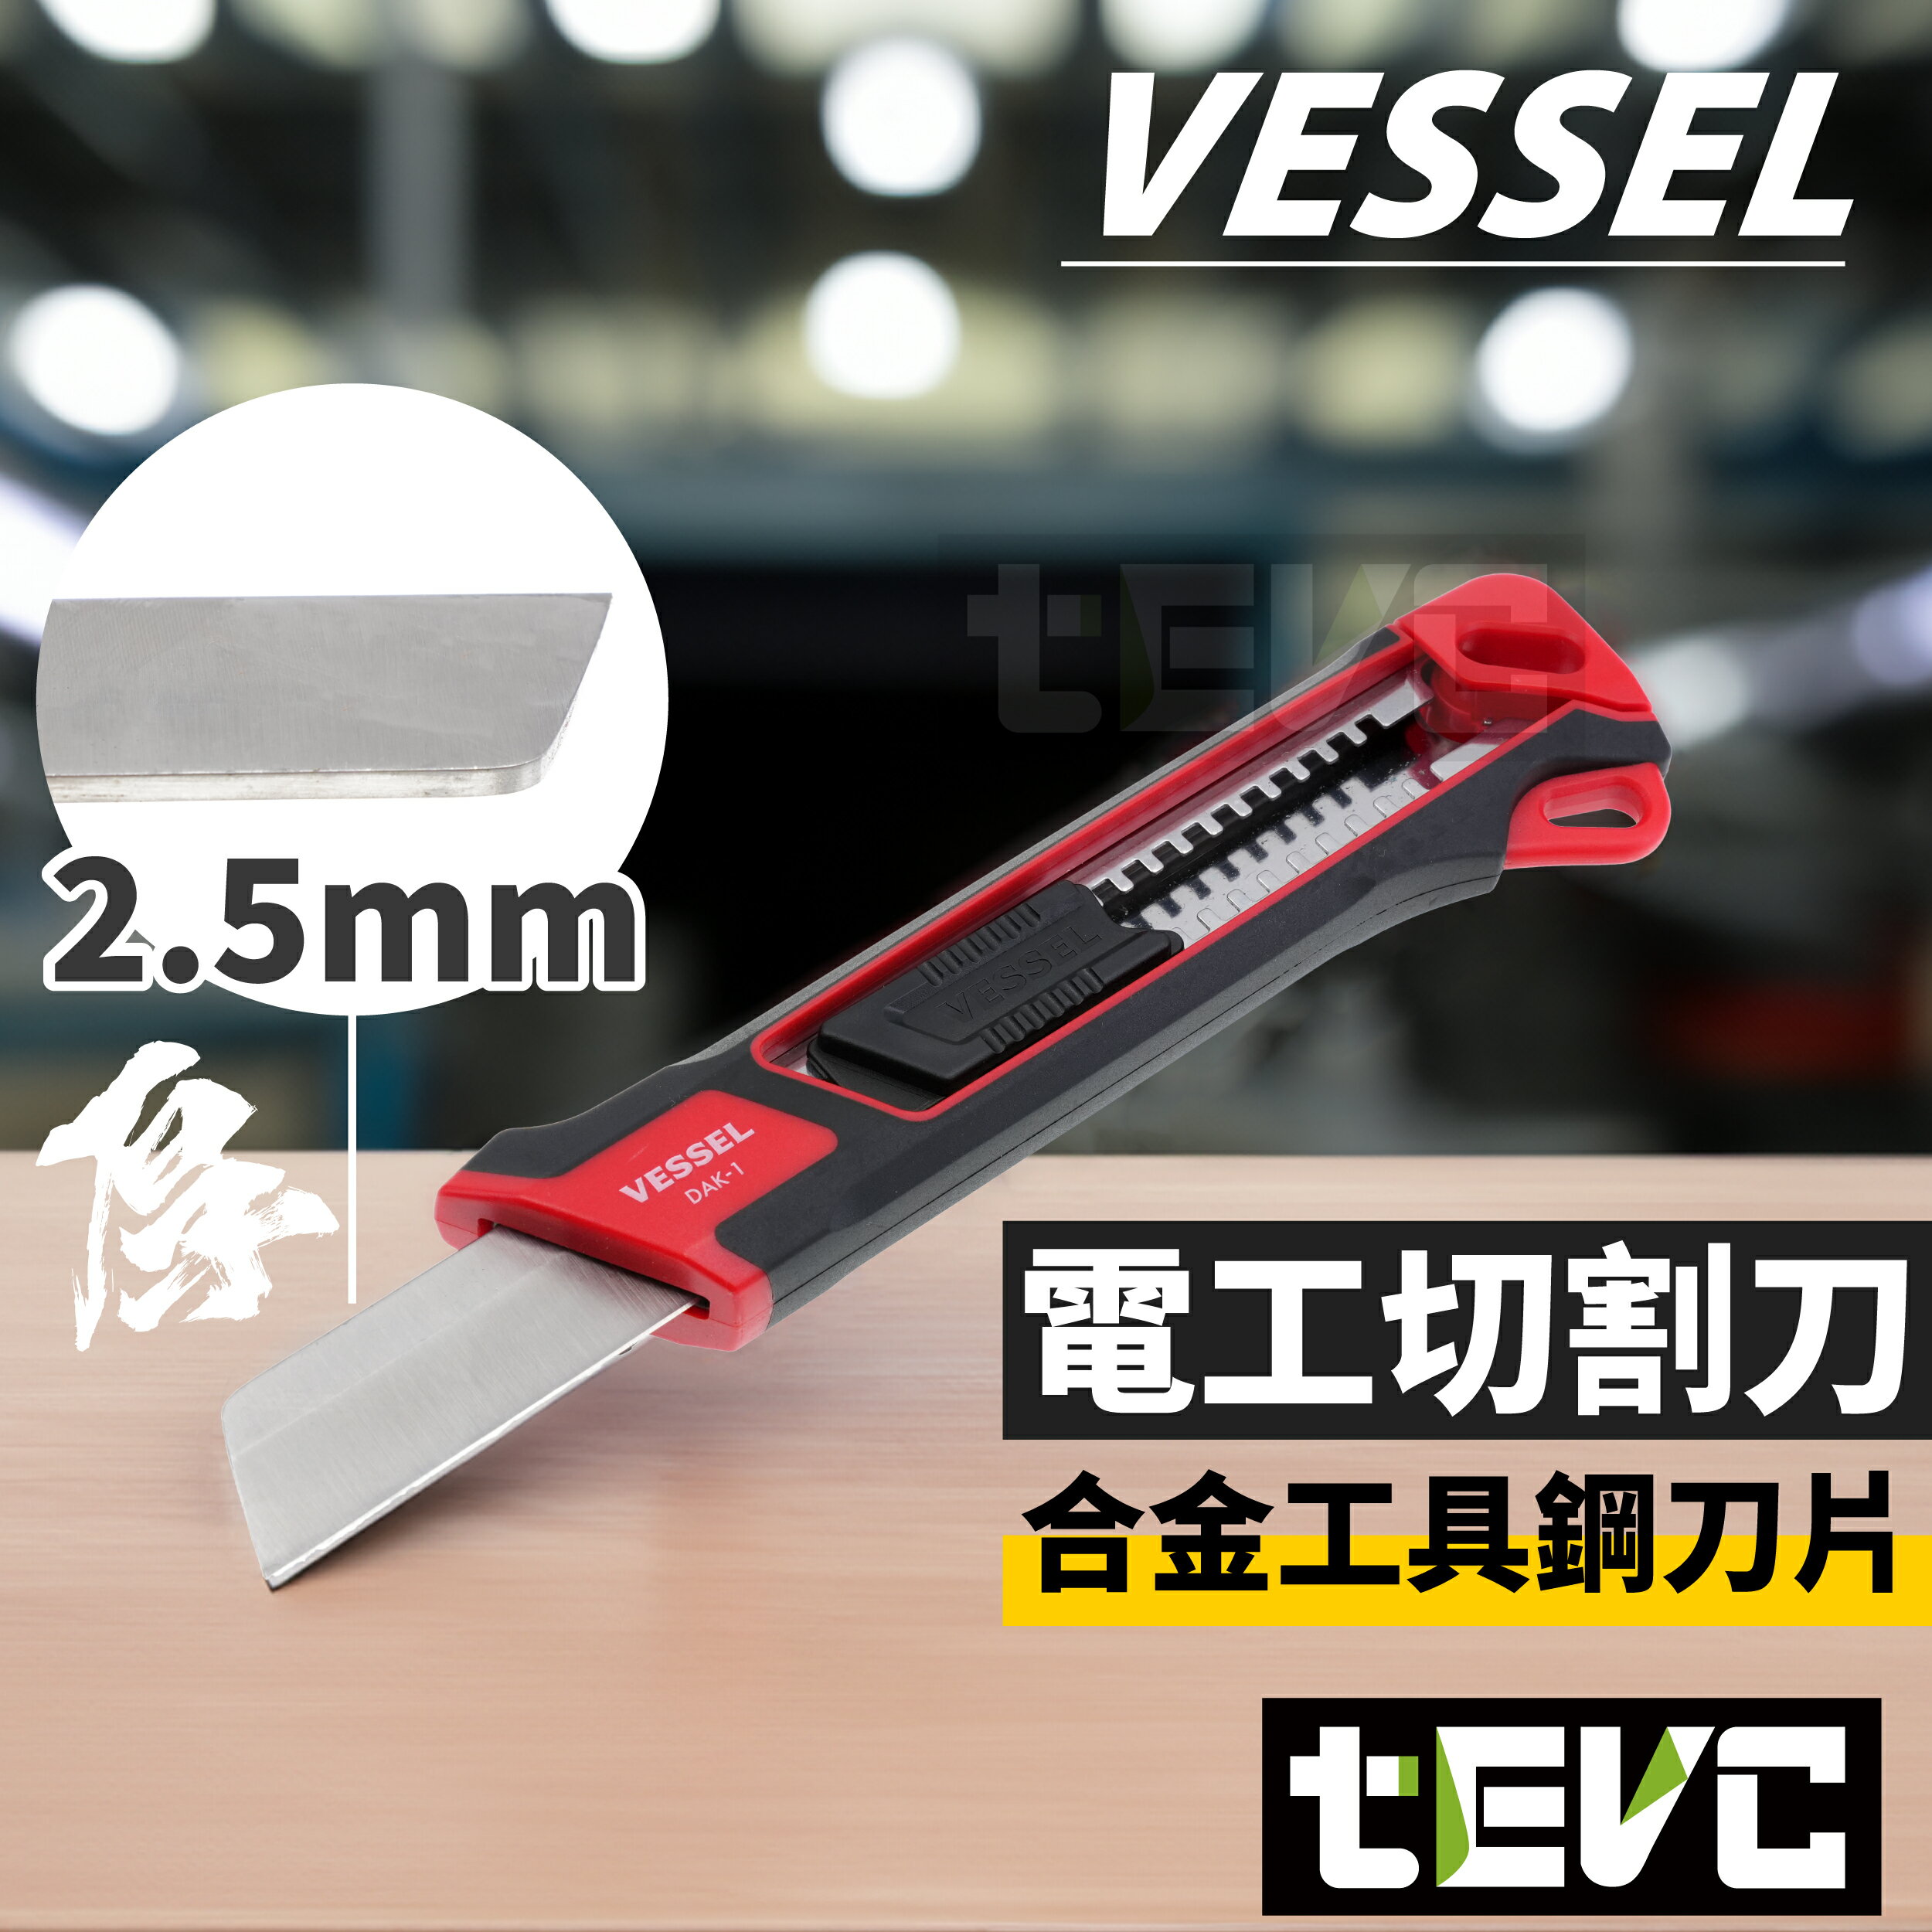 《tevc》現貨 發票 日本 VESSEL 美工刀 電工刀 重型美工刀 工業級 專業版 合金鋼 不鏽鋼 裁切刀 白扁線